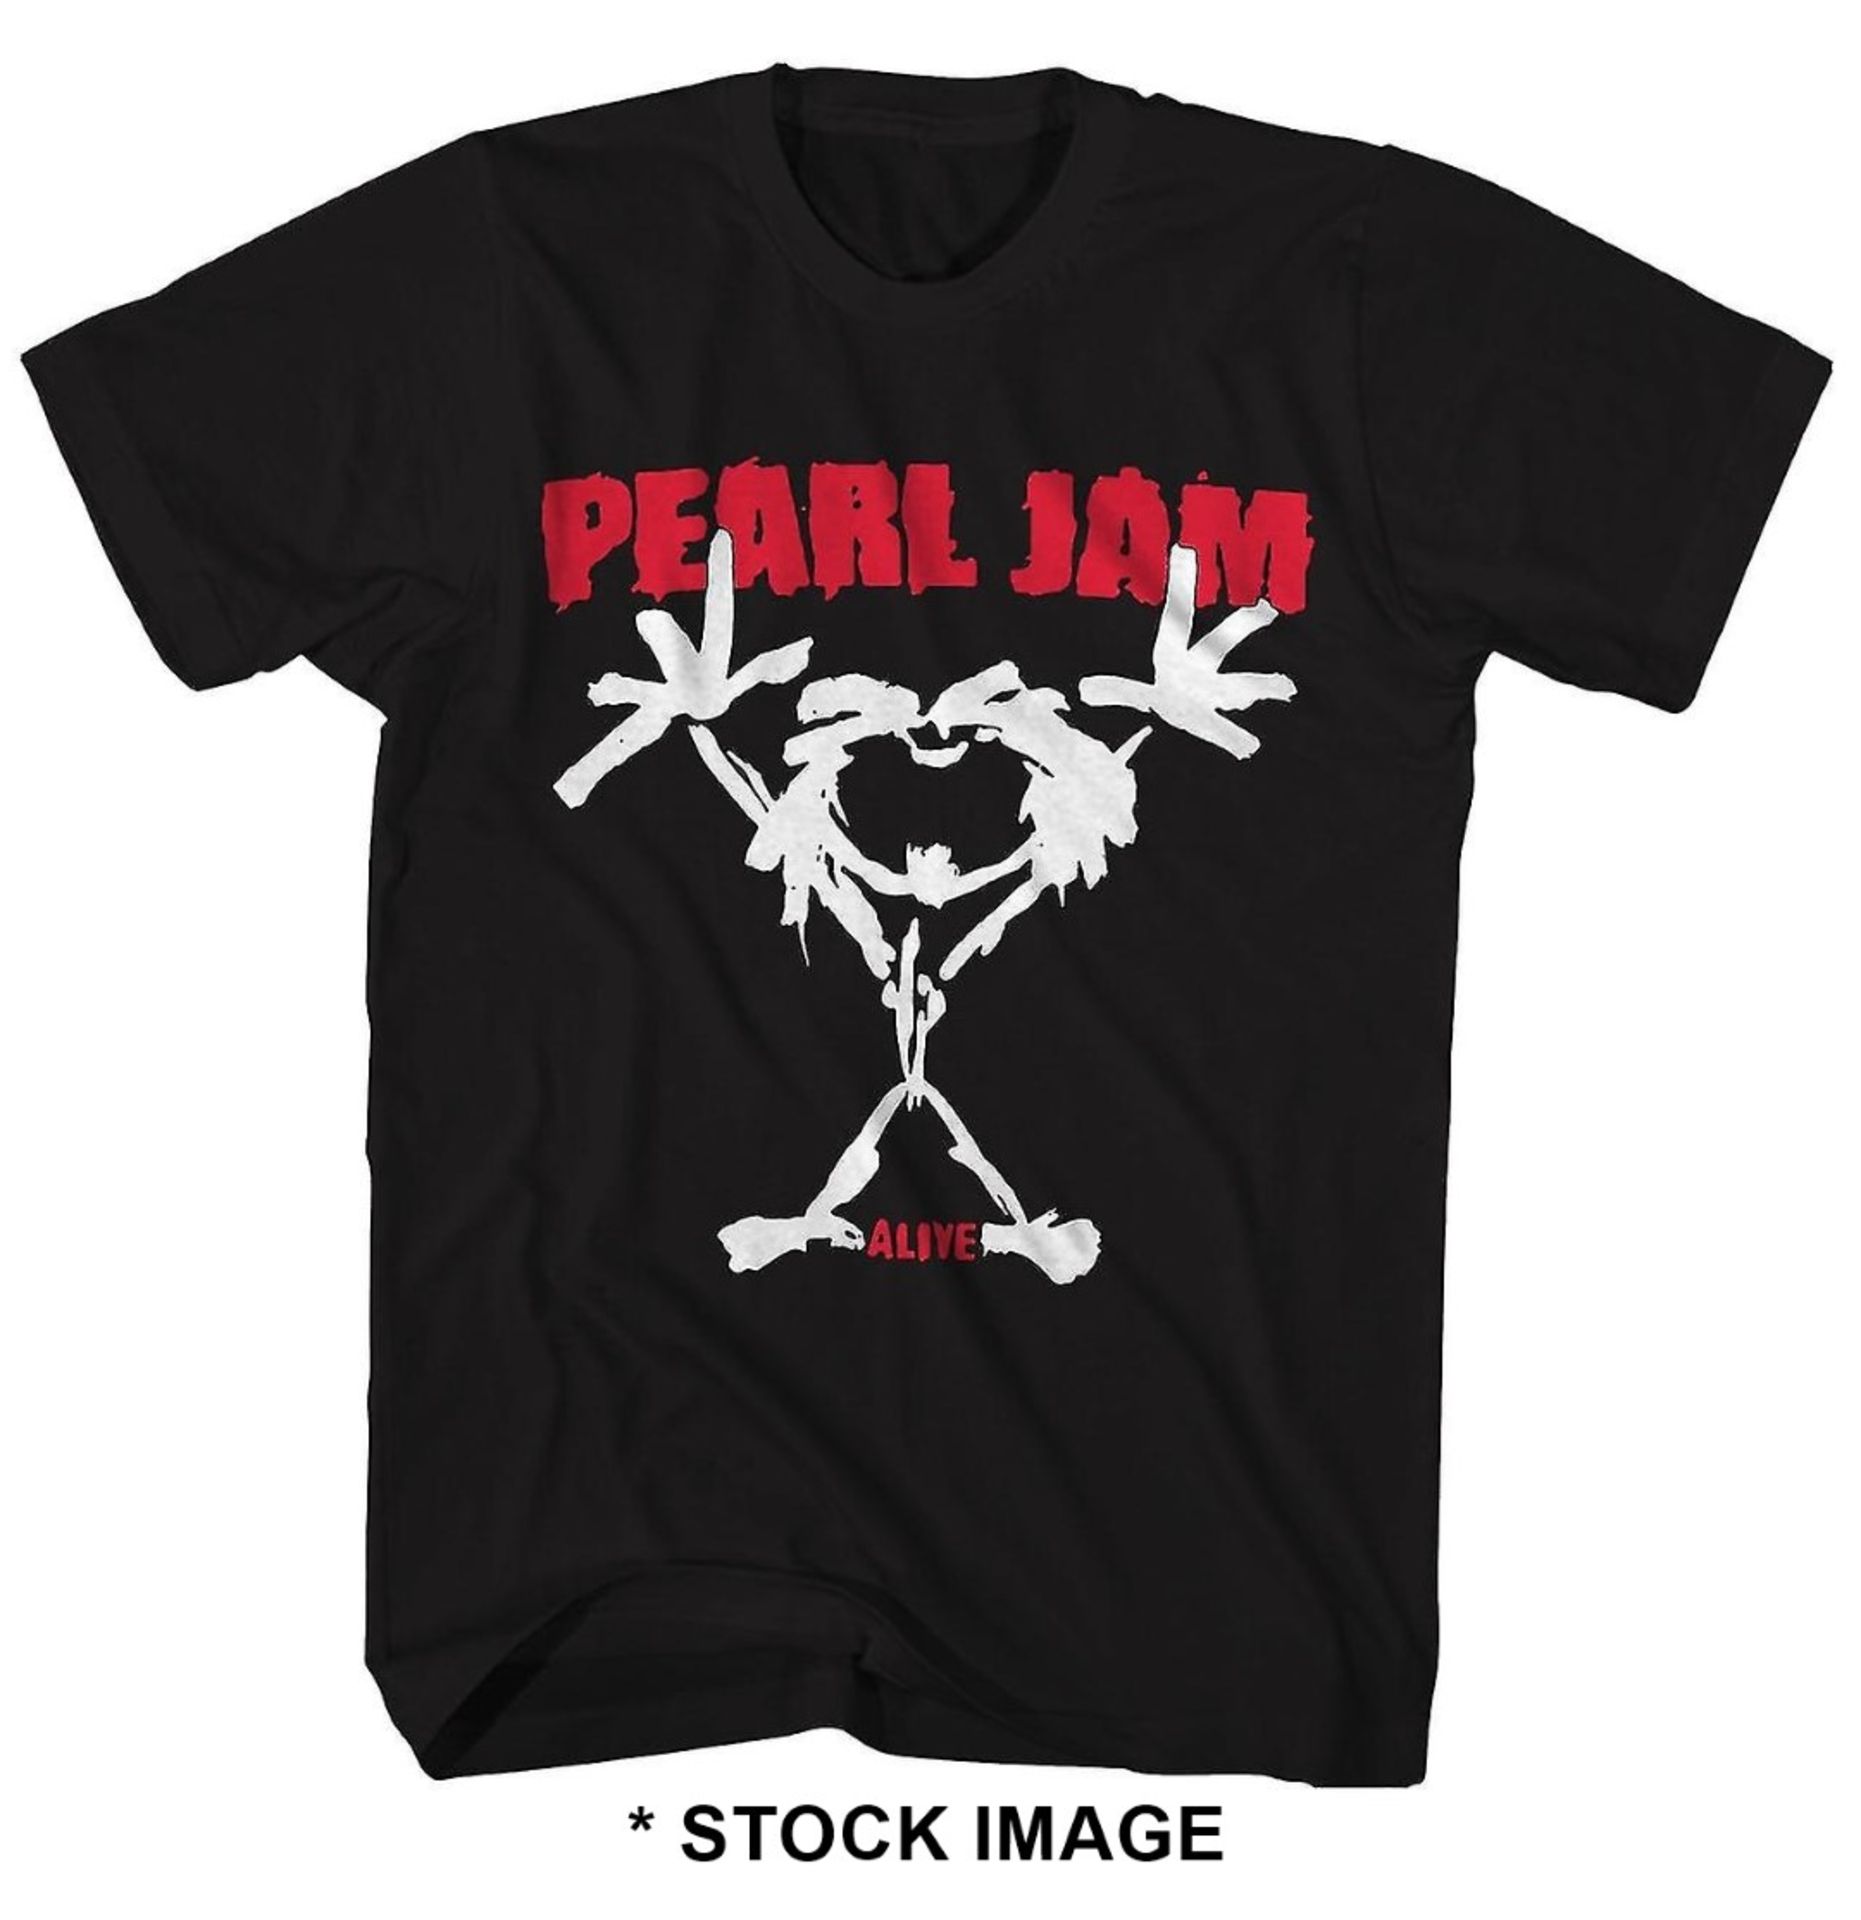 1 x PEARL JAM Alive Stickman Short Sleeve Men's T-Shirt by Gildan - Size: XXL - Colour: Black - New